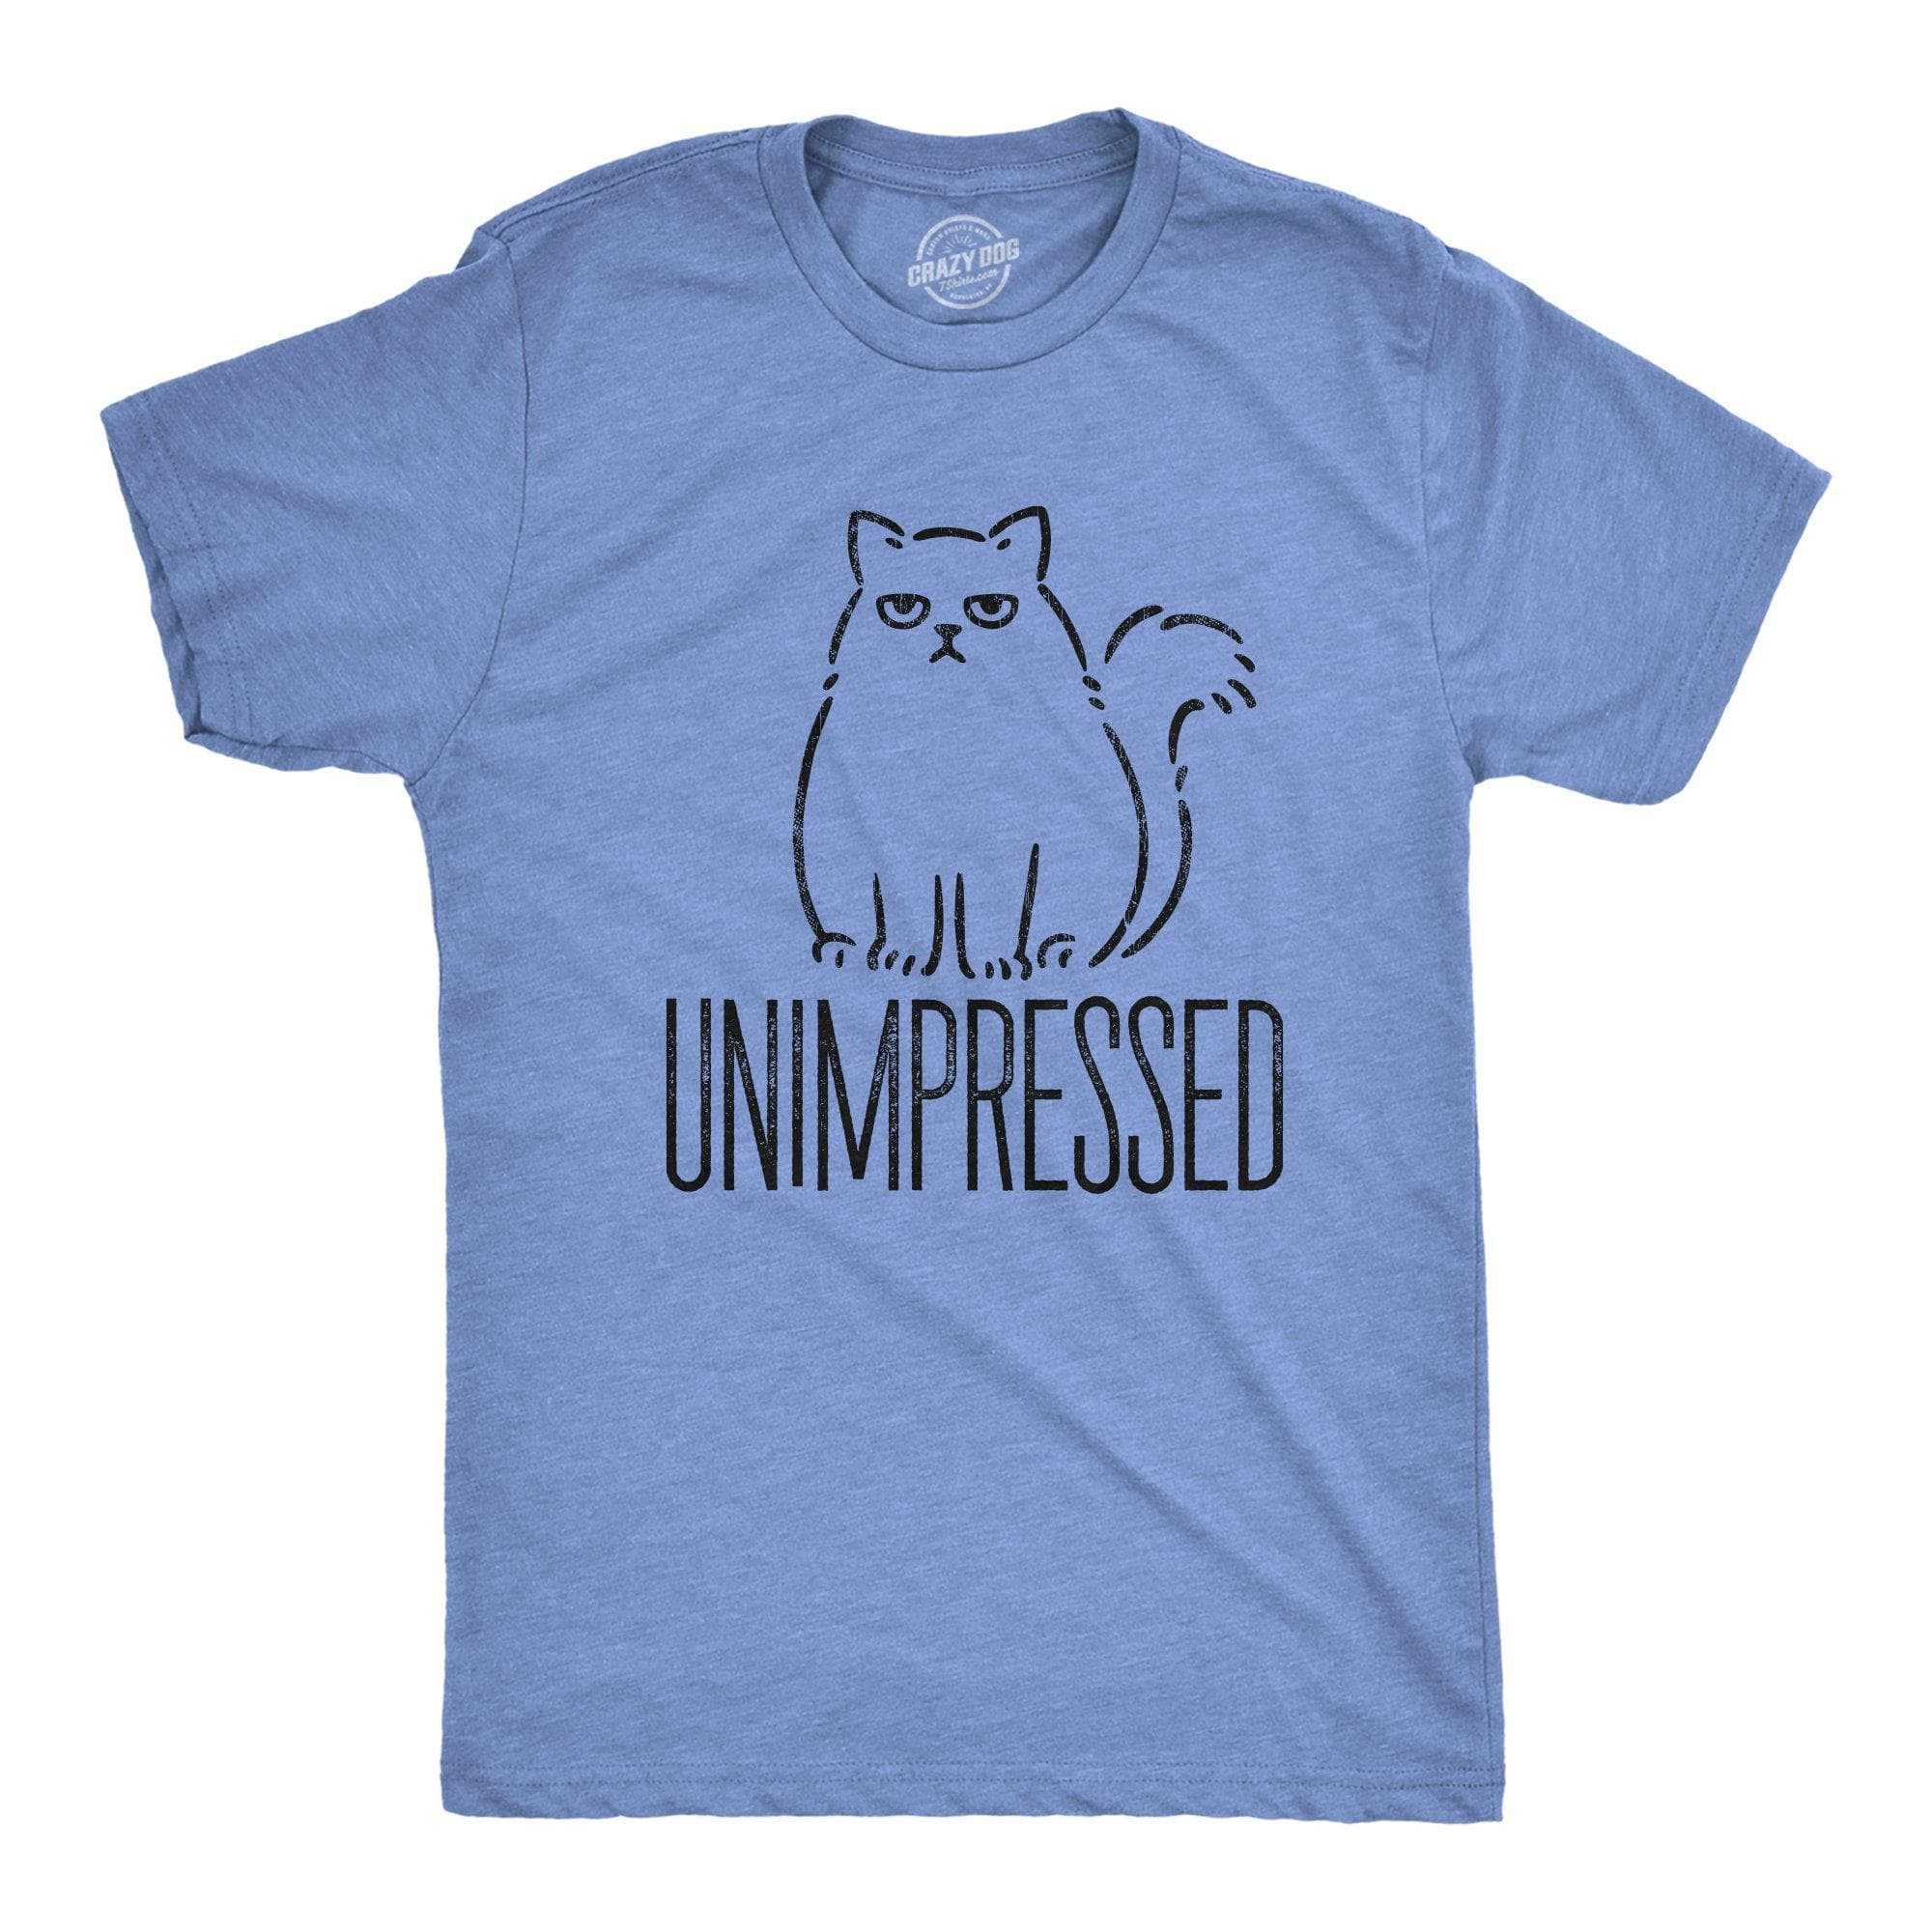 Unimpressed Men's Tshirt - Crazy Dog T-Shirts